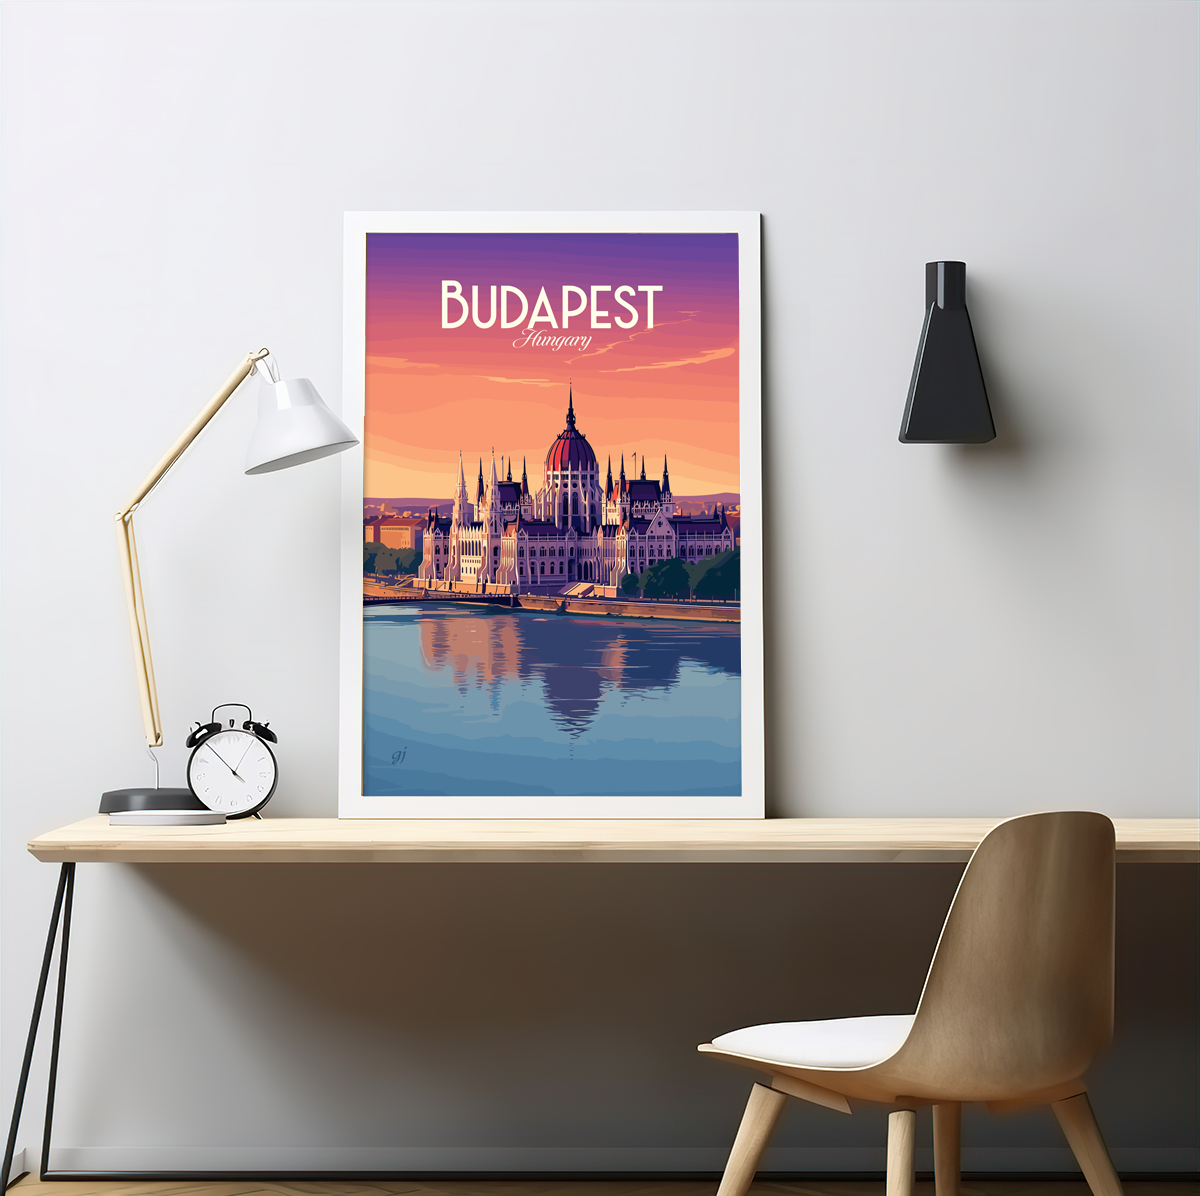 Budapest poster by bon voyage design